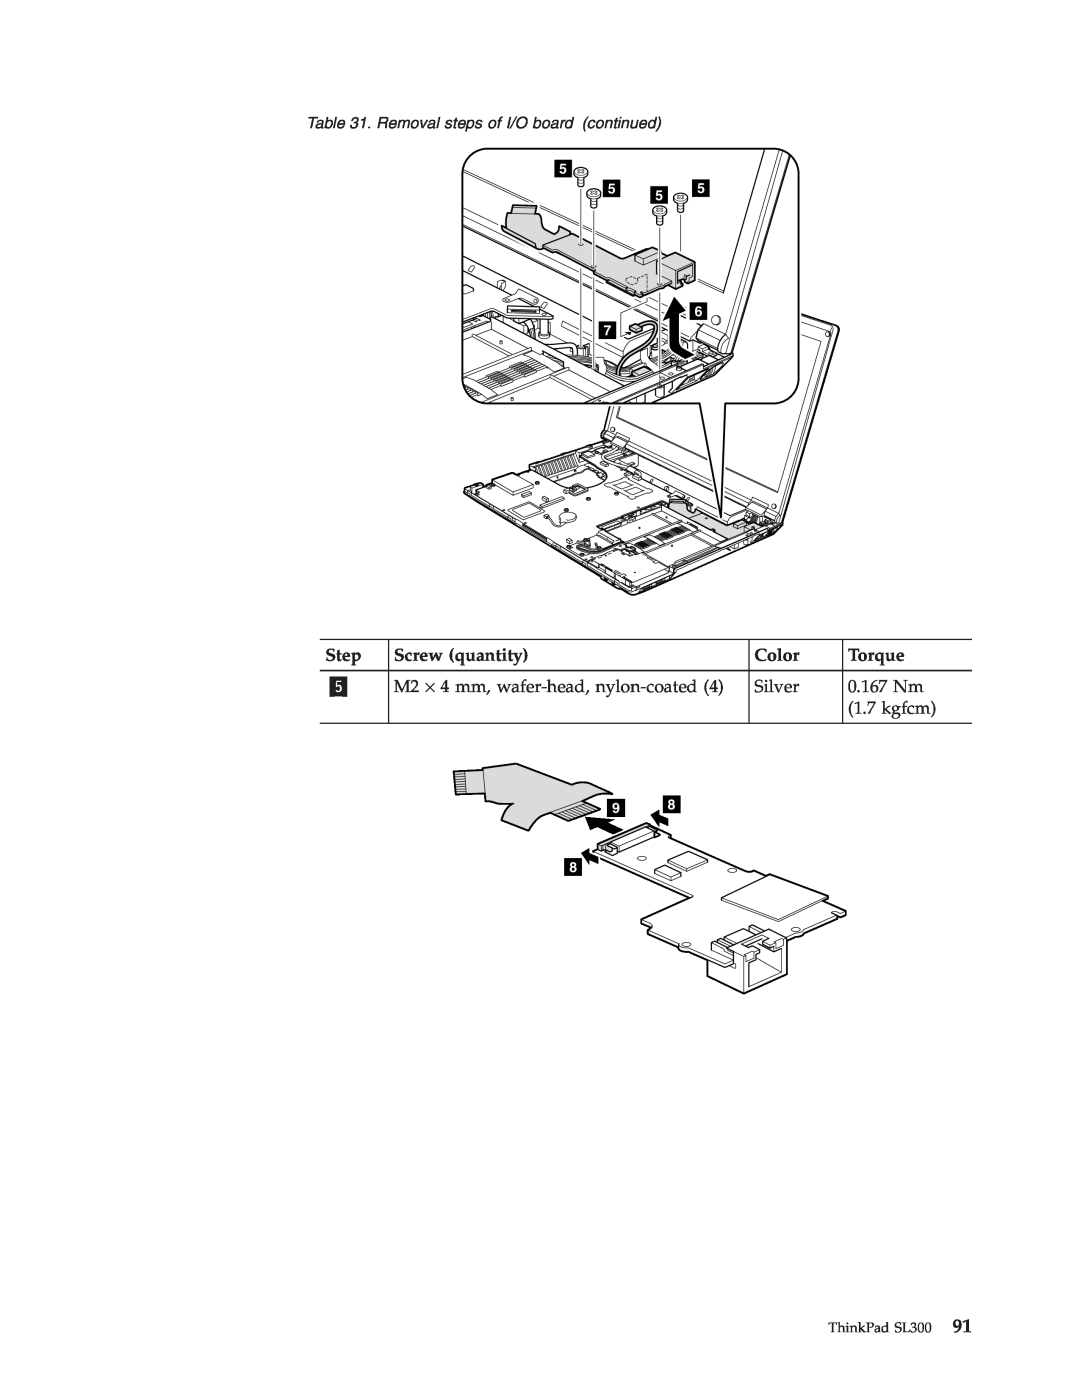 Lenovo manual Step, Screw quantity, Color, Torque, Removal steps of I/O board continued, ThinkPad SL300 